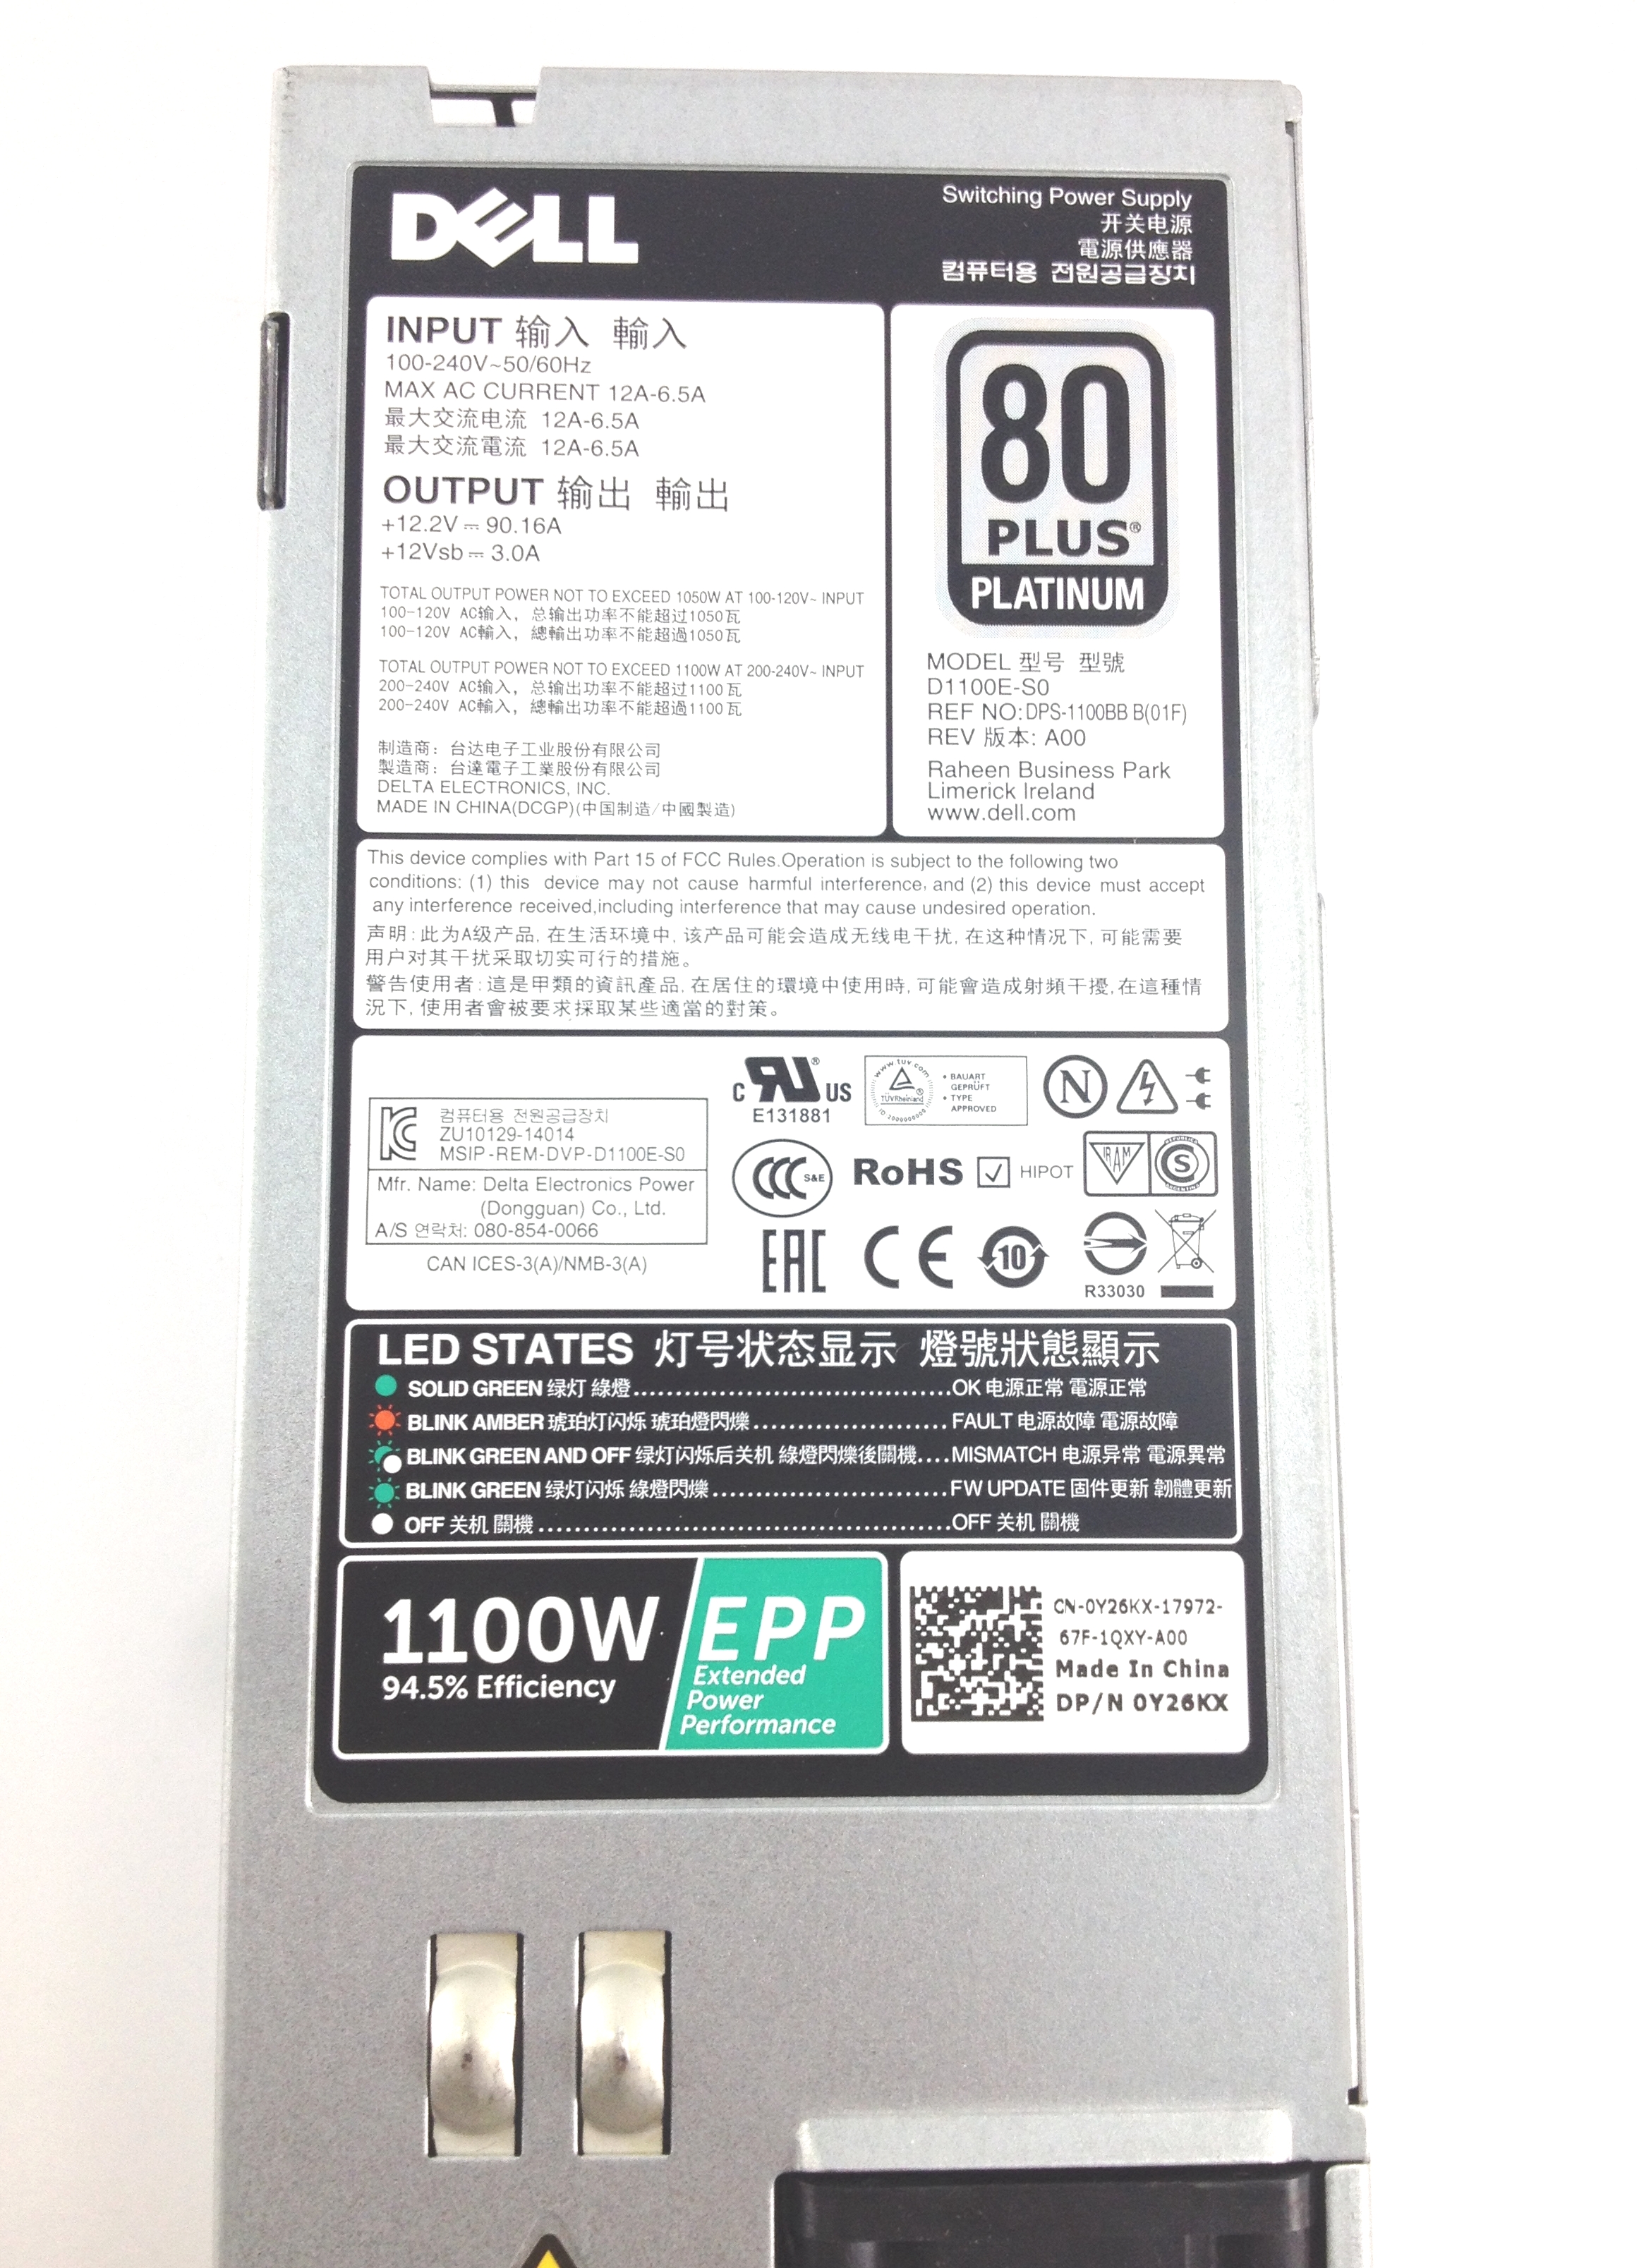 Dell PowerEdge 1100W EPP Watt PSU Power Supply For C4130 R730 R630 T630 R7910 (Y26KX)